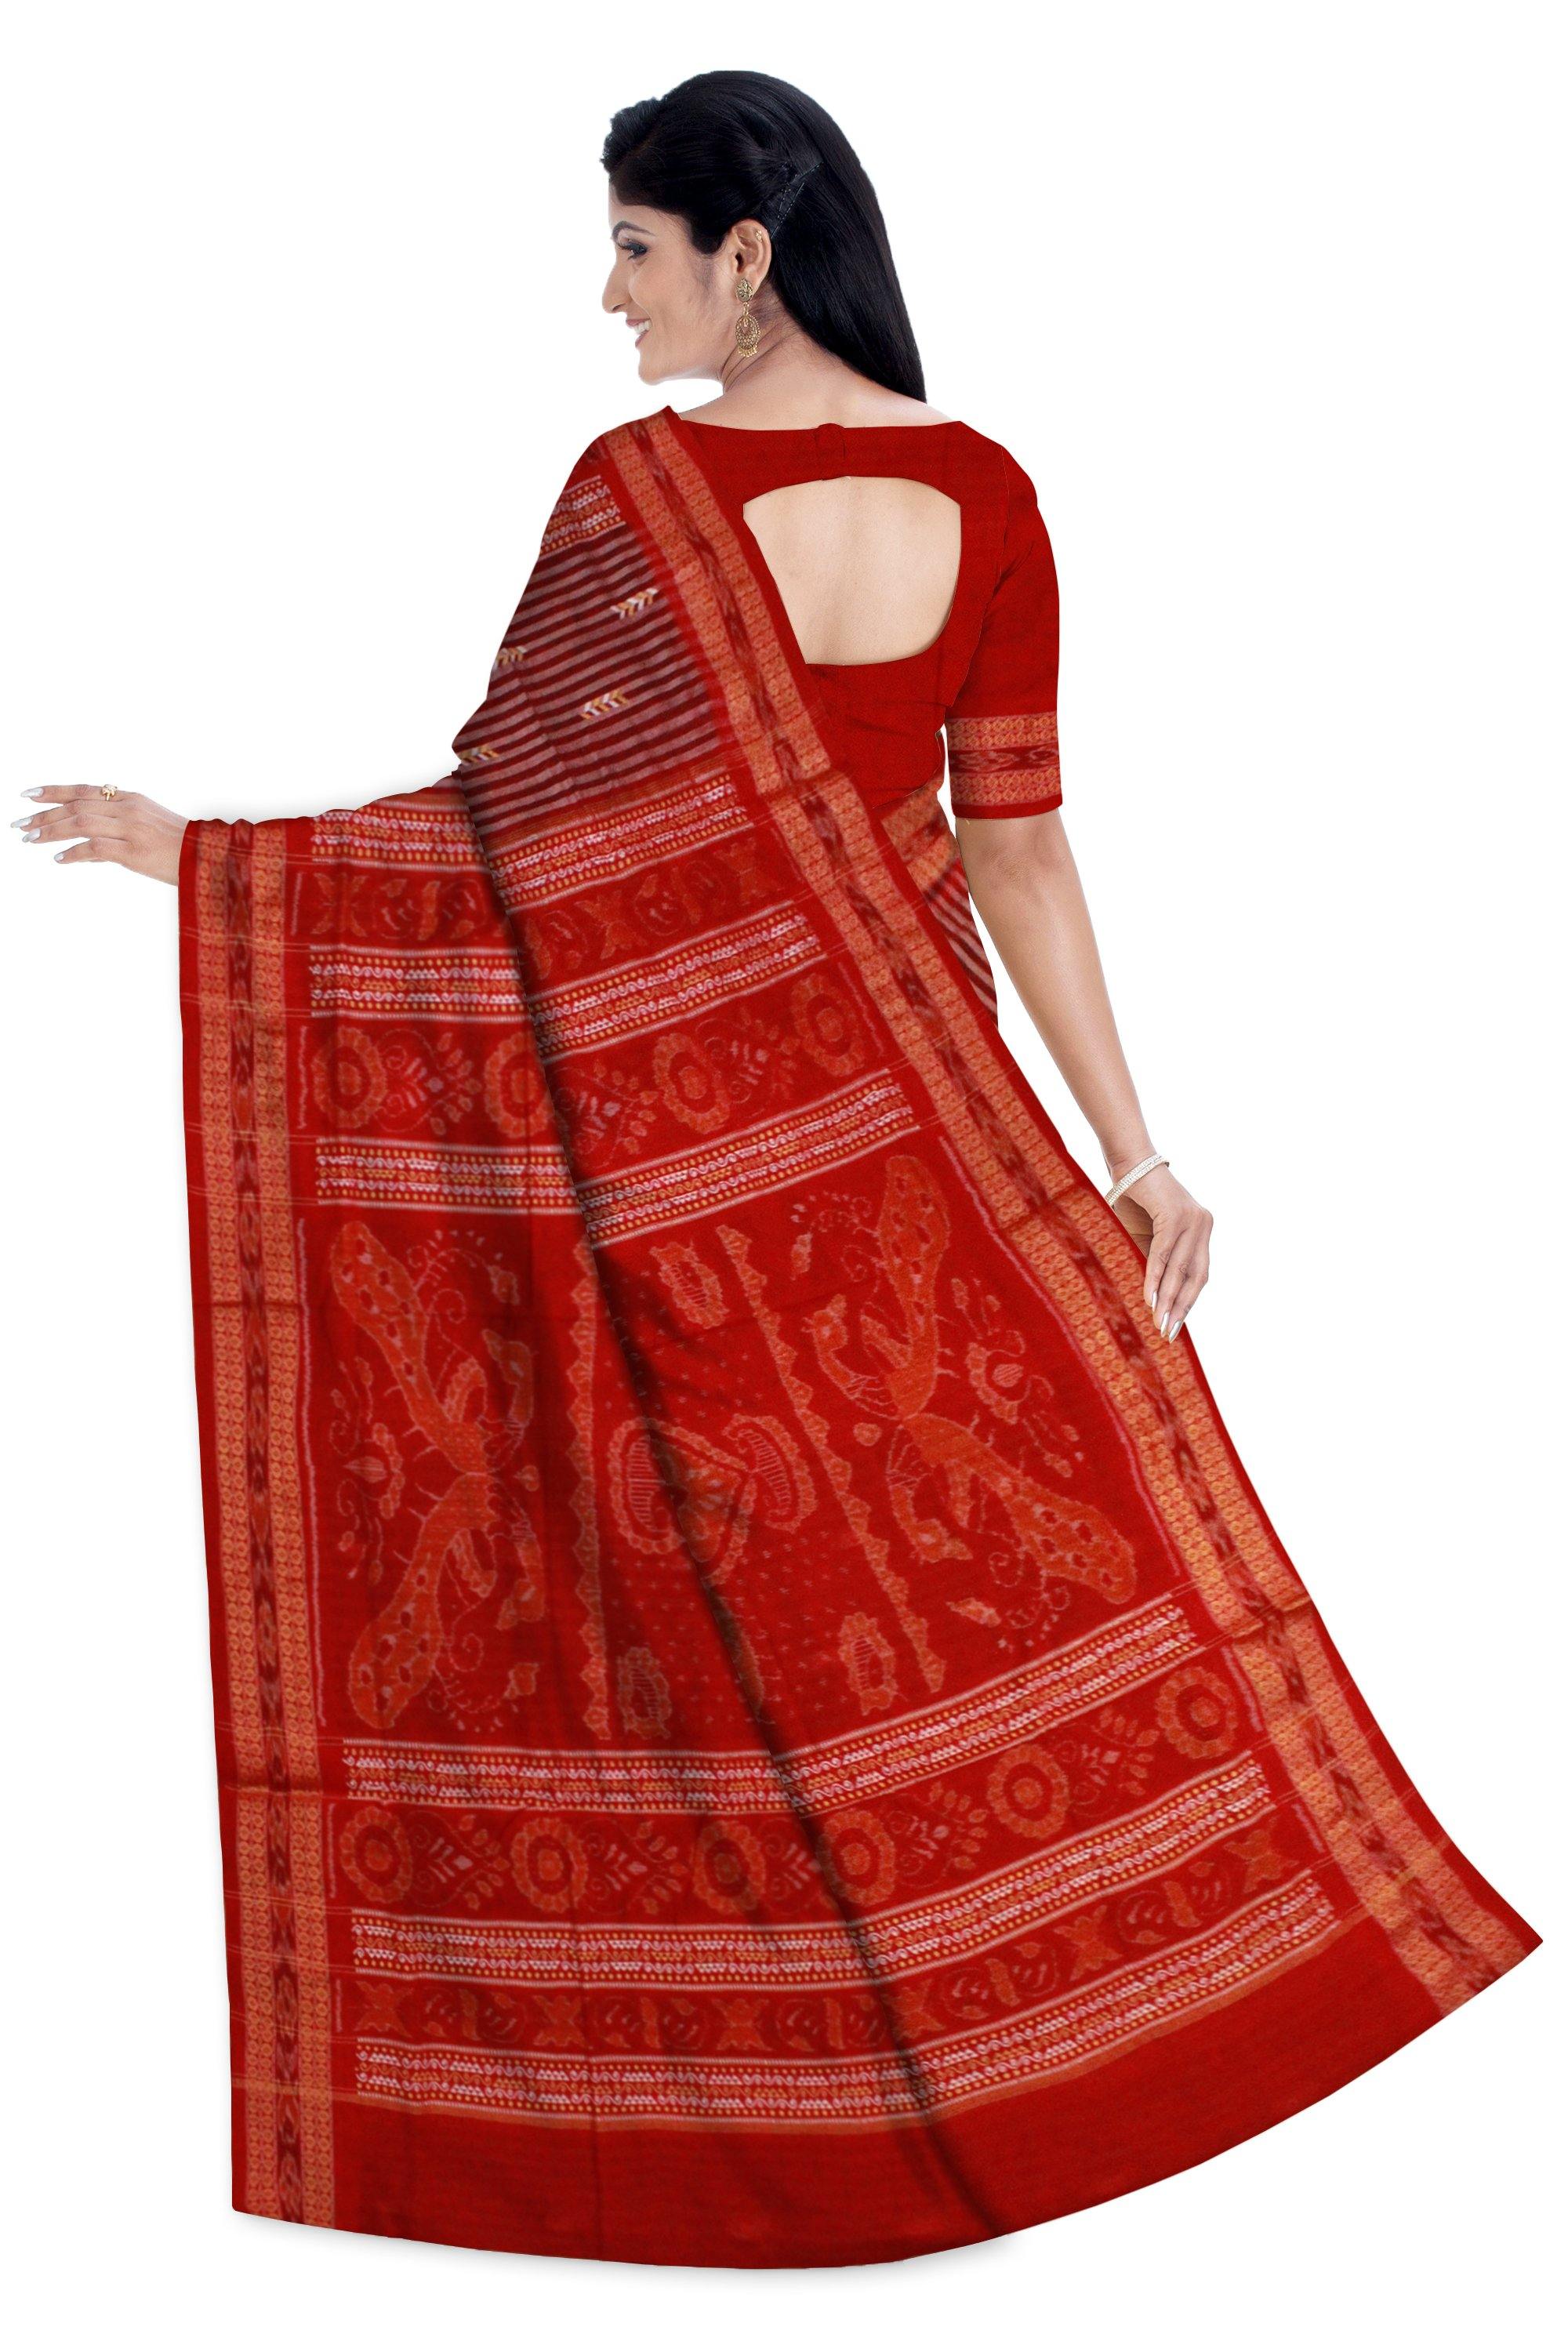 Maroon color flora print cotton saree with blouse piece - Koshali Arts & Crafts Enterprise